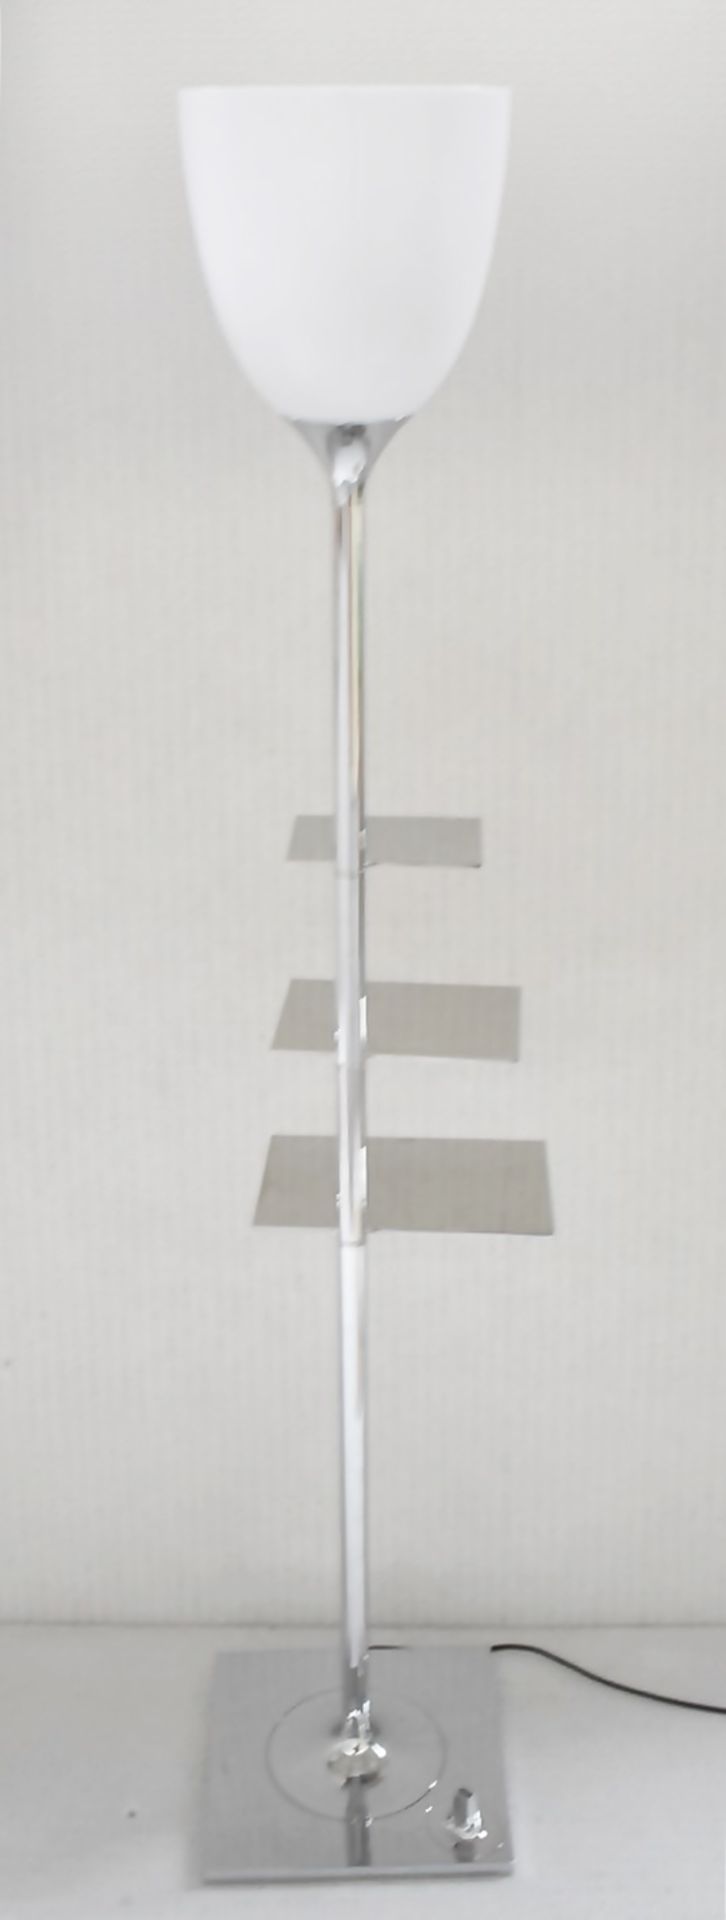 1 x FLOS / PHILIPPE STARCK 'Bibliotheque Nationale' Designer Floor Lamp - Original Price £1,725 - Image 6 of 15